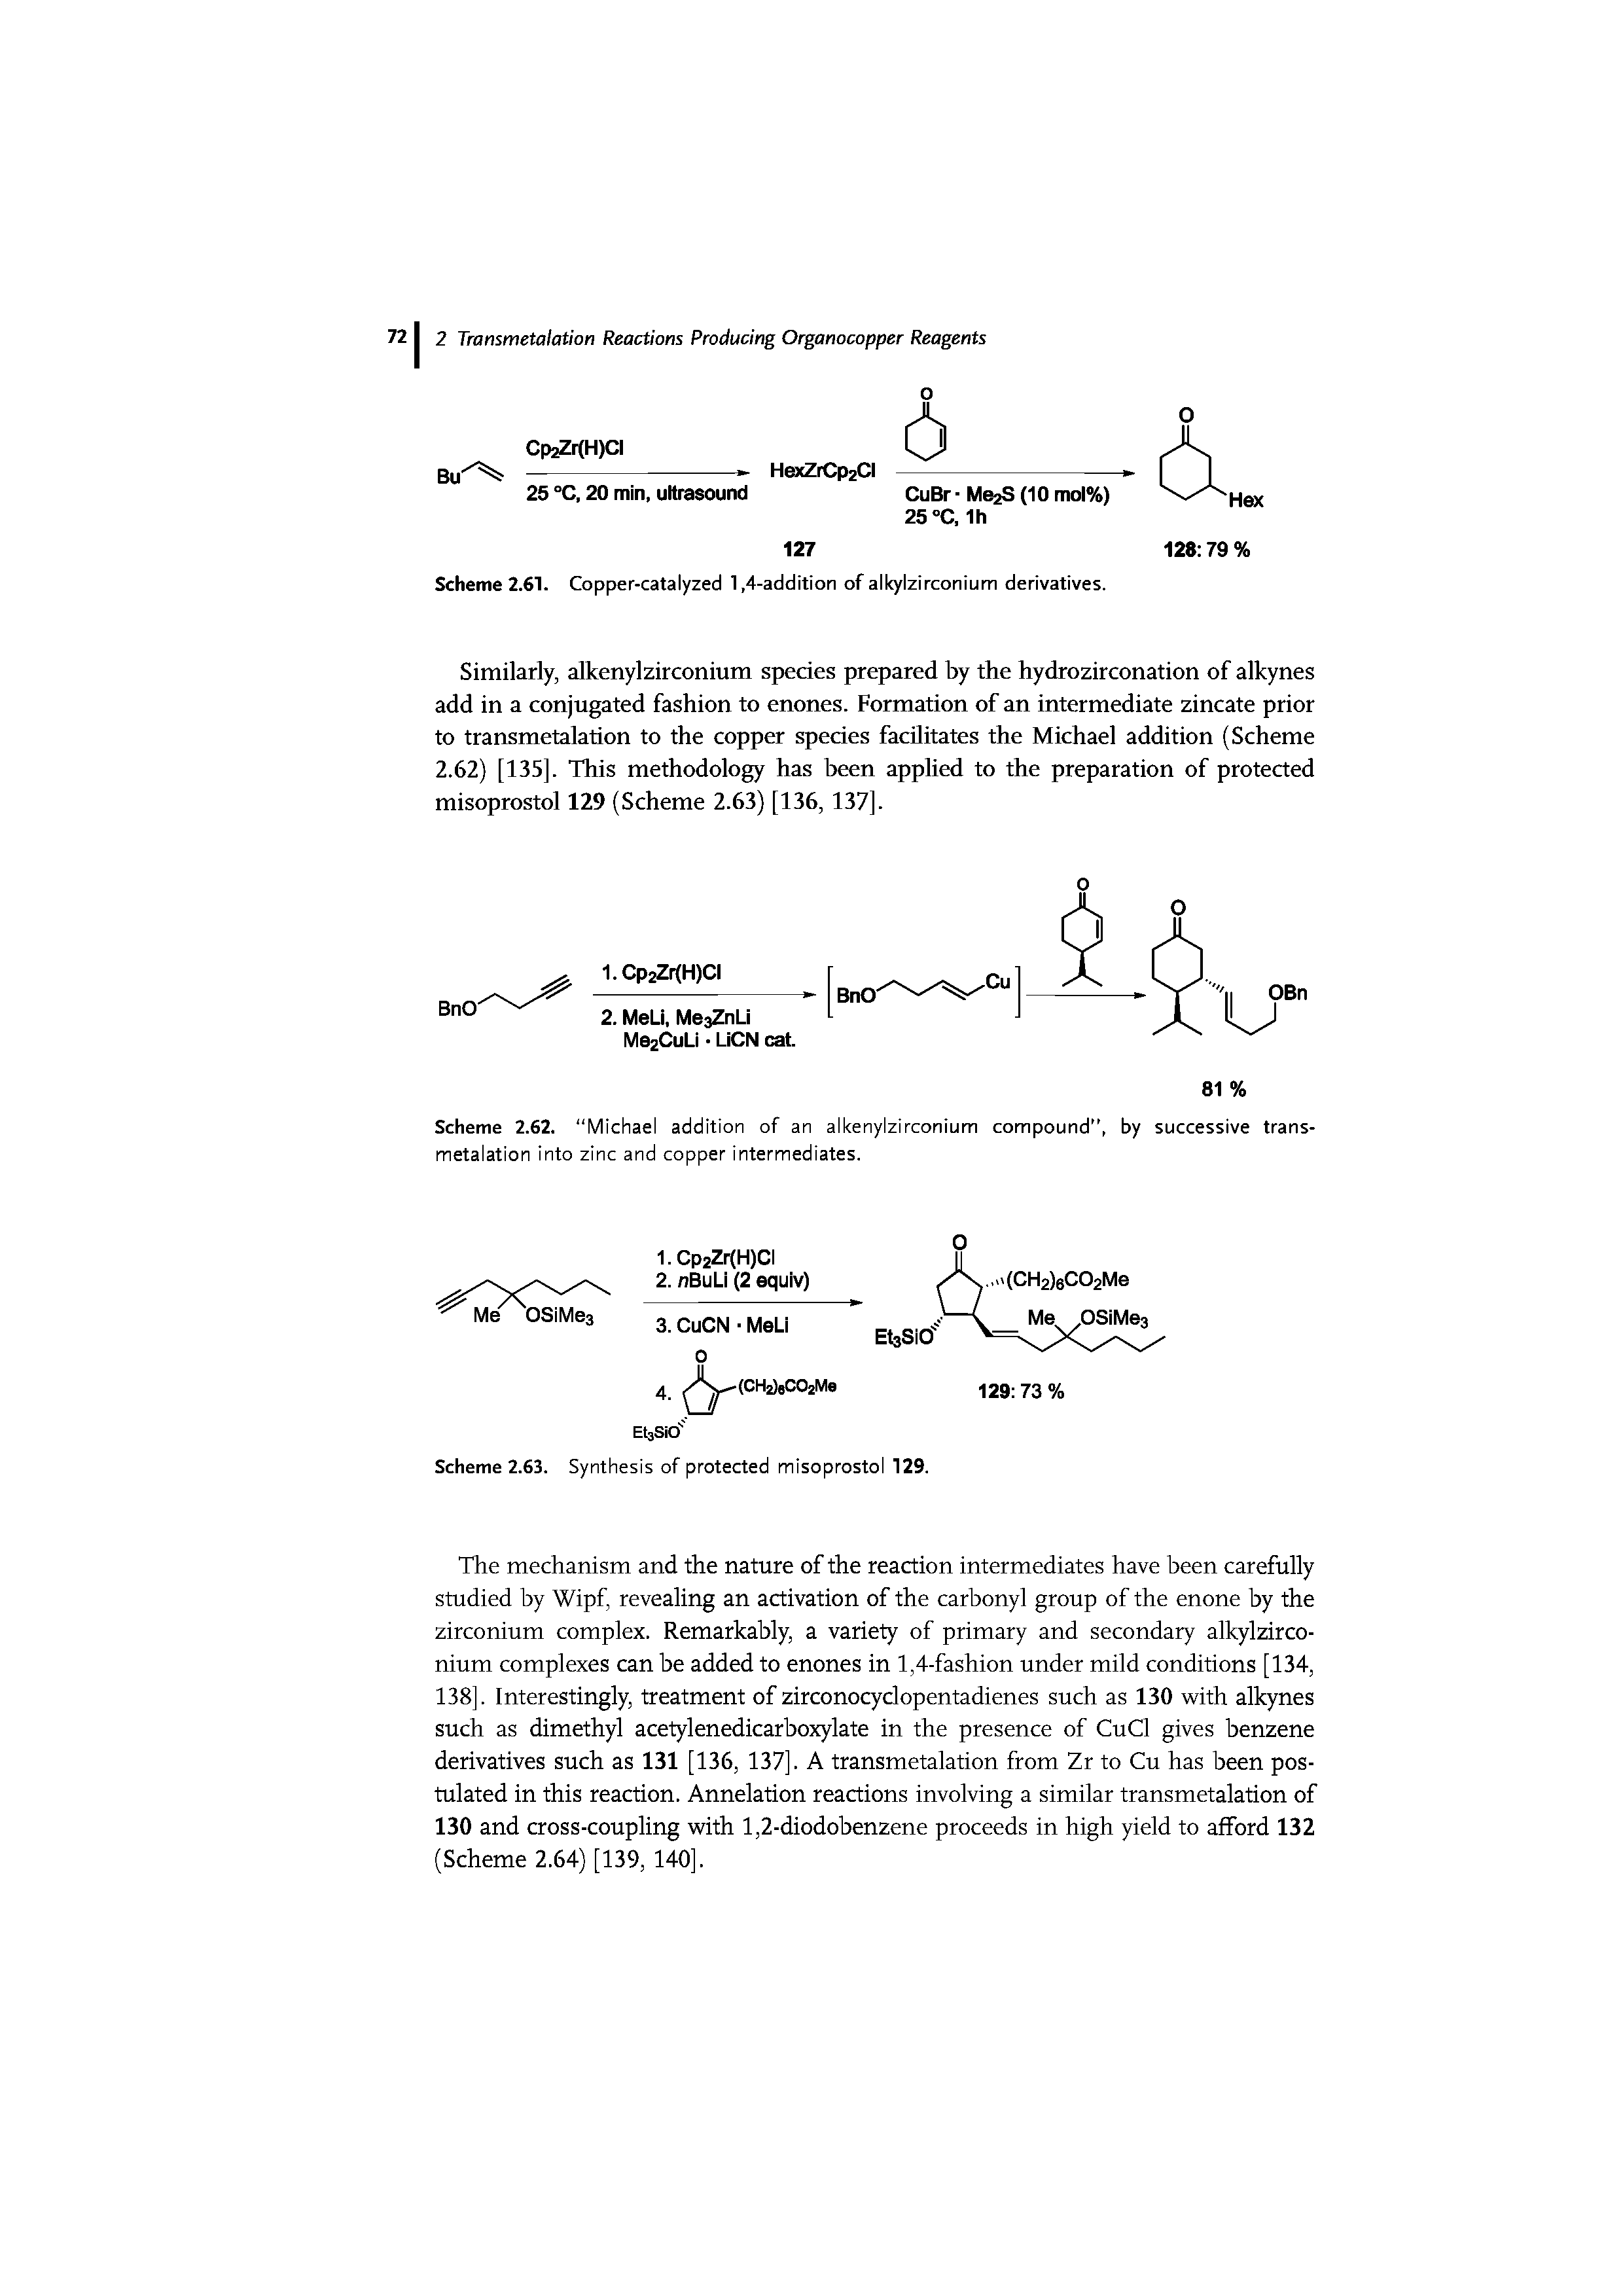 Scheme 2.62. Michael addition of an alkenylzirconium compound", by successive transmetalation into zinc and copper intermediates.